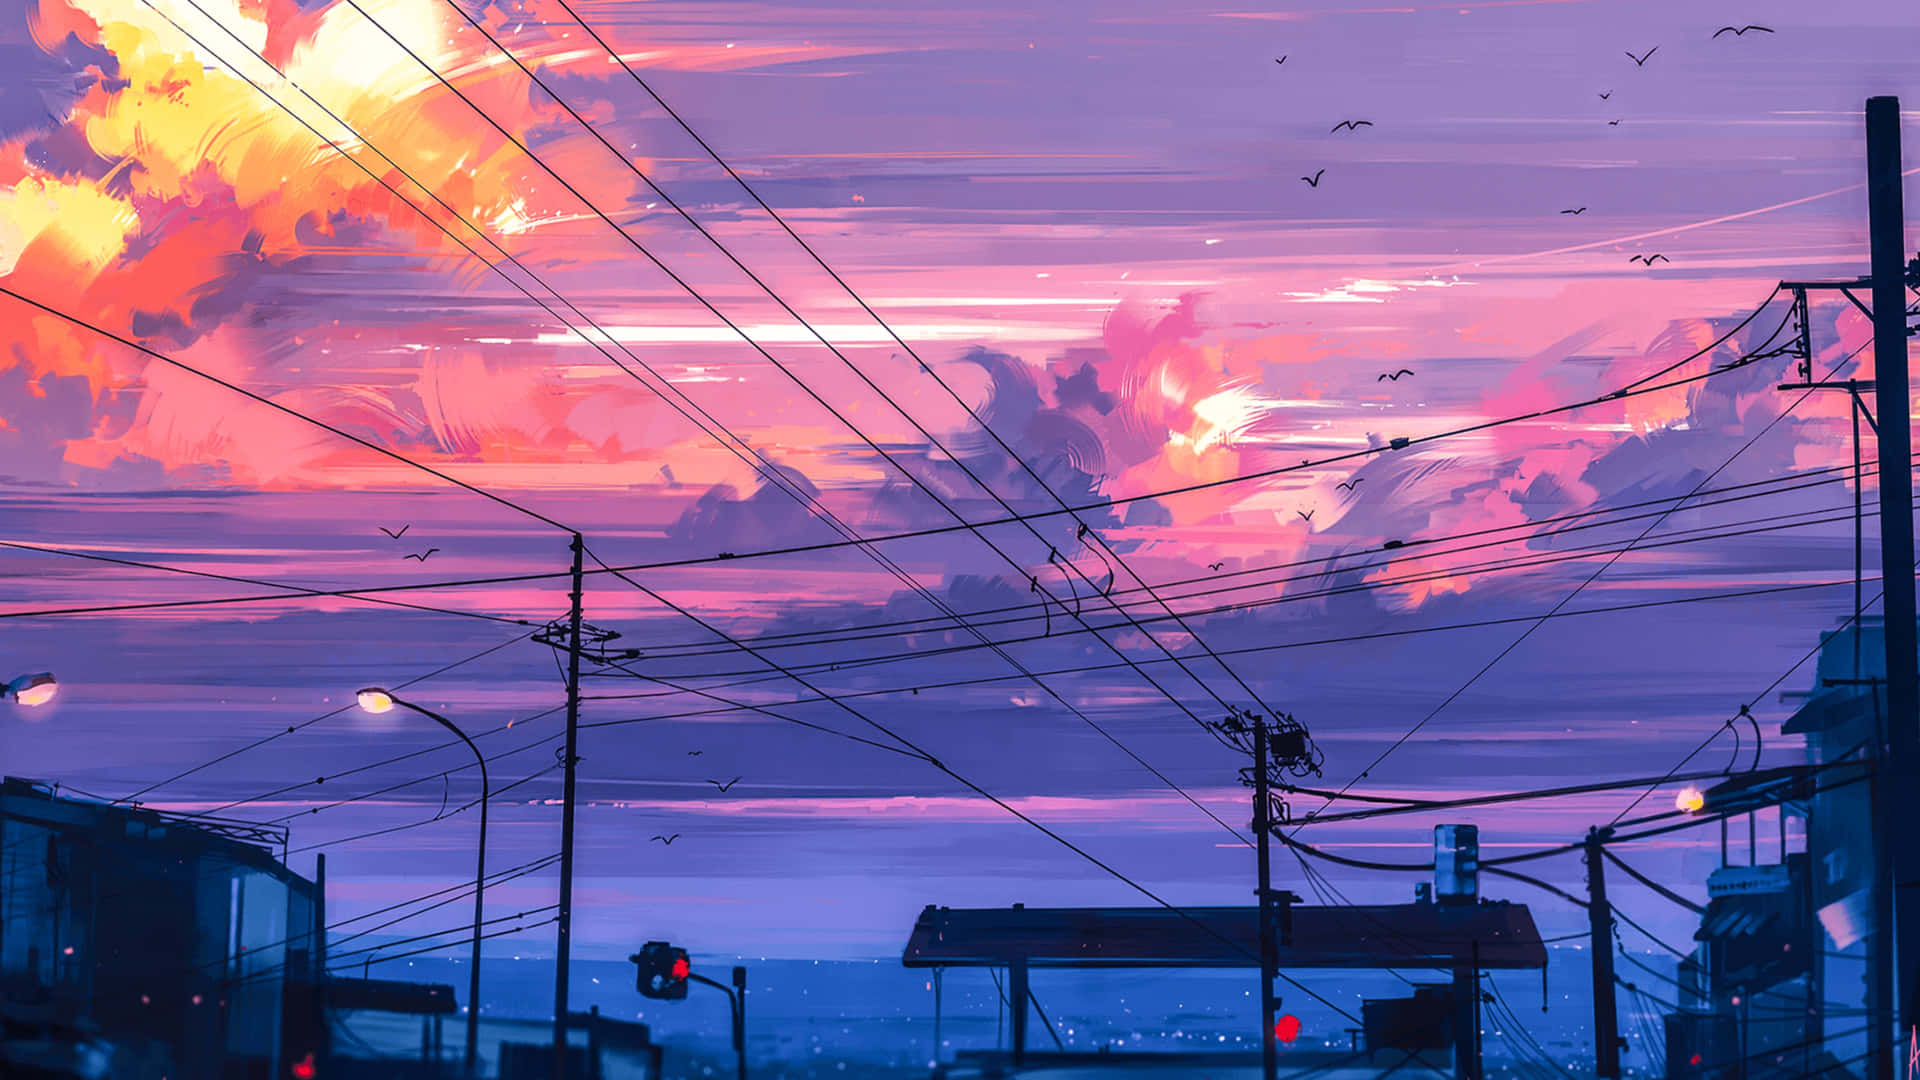 100+) Tumblr | Anime scenery wallpaper, Anime scenery, Anime background